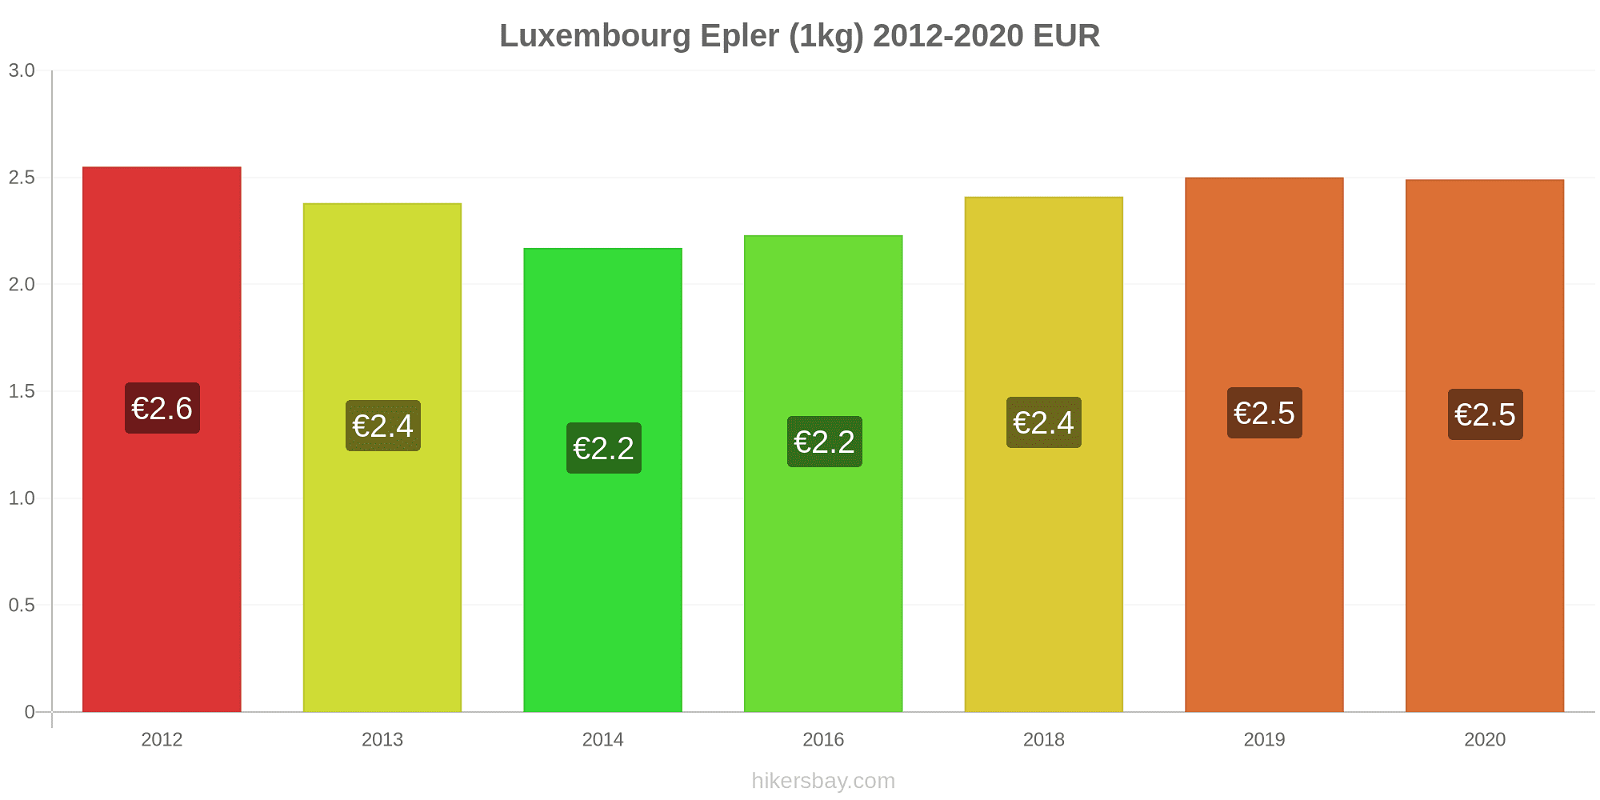 Luxembourg prisendringer Epler (1kg) hikersbay.com